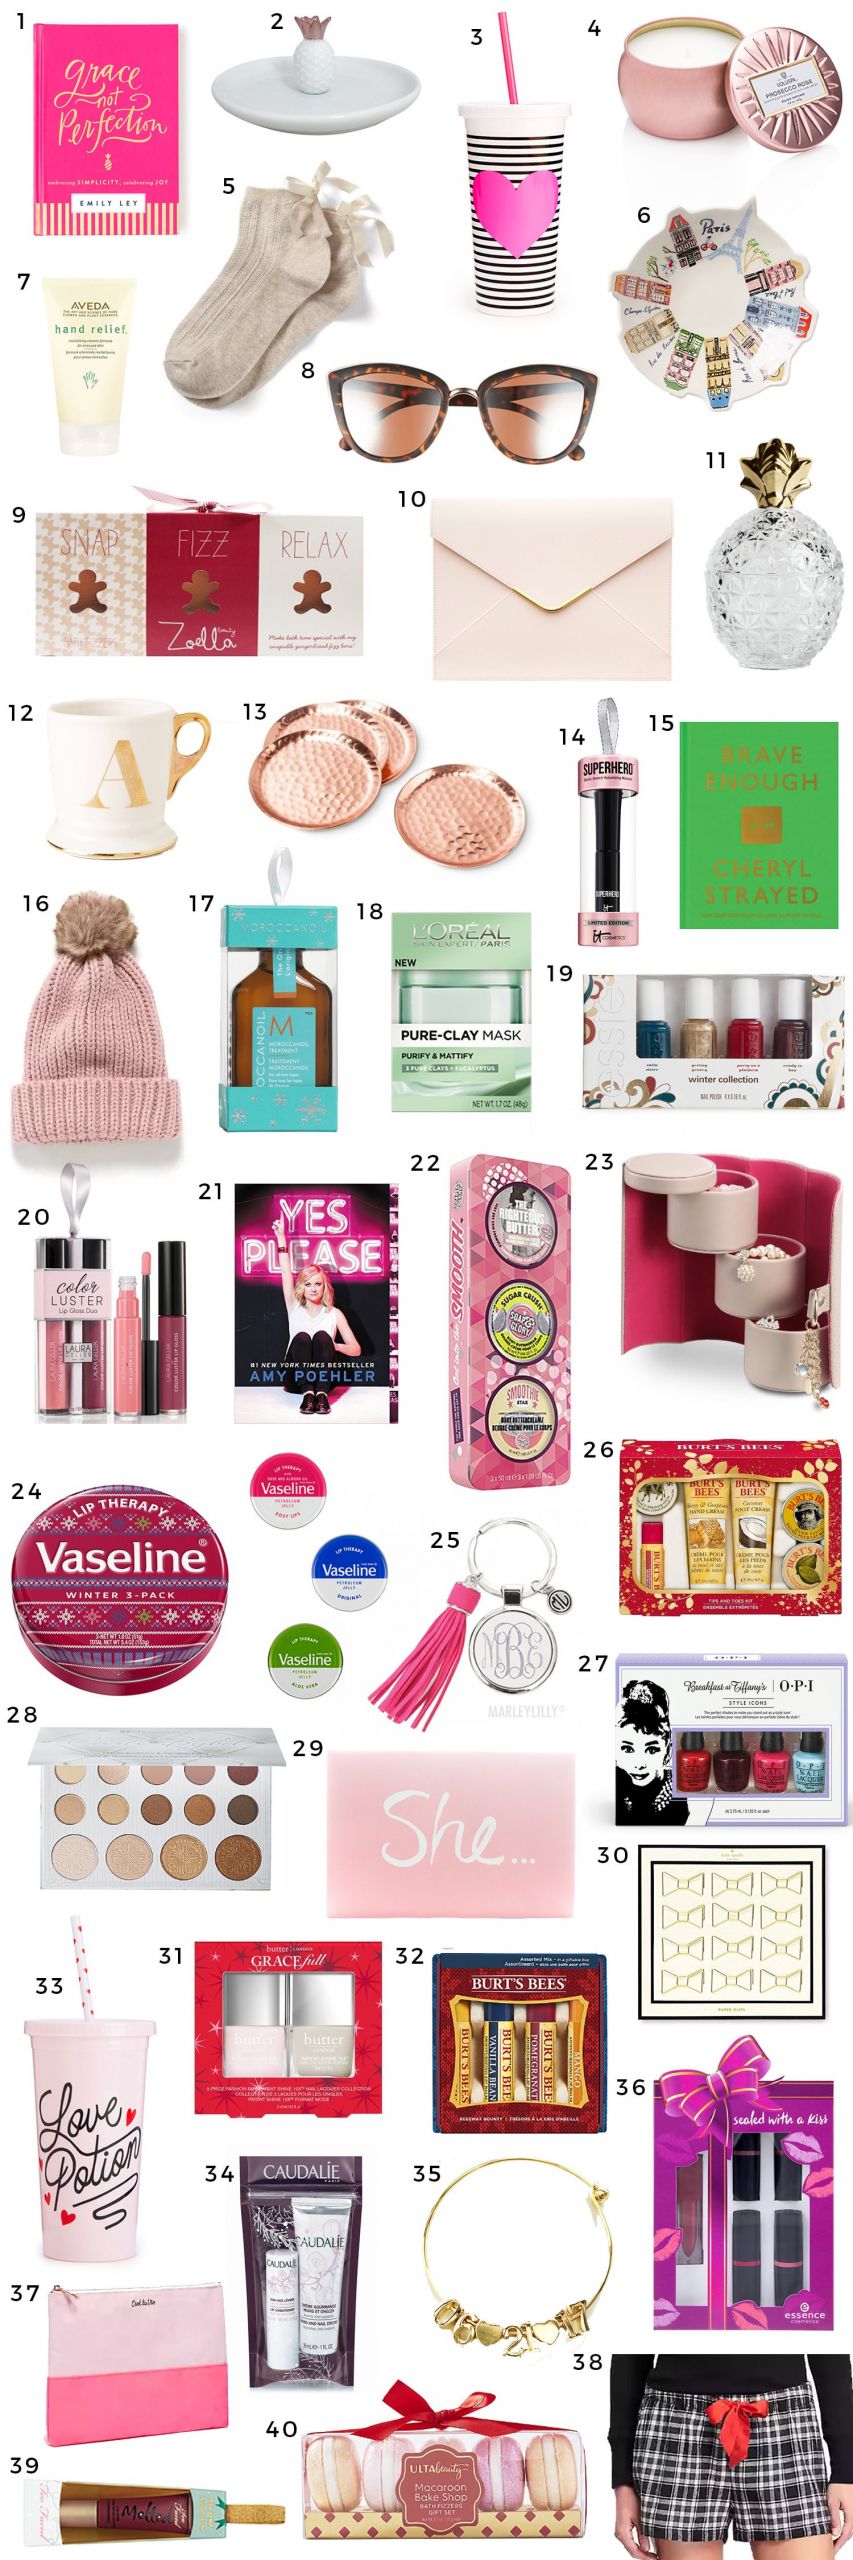 Best Gift Ideas For Women
 The Best Christmas Gift Ideas for Women Under $15